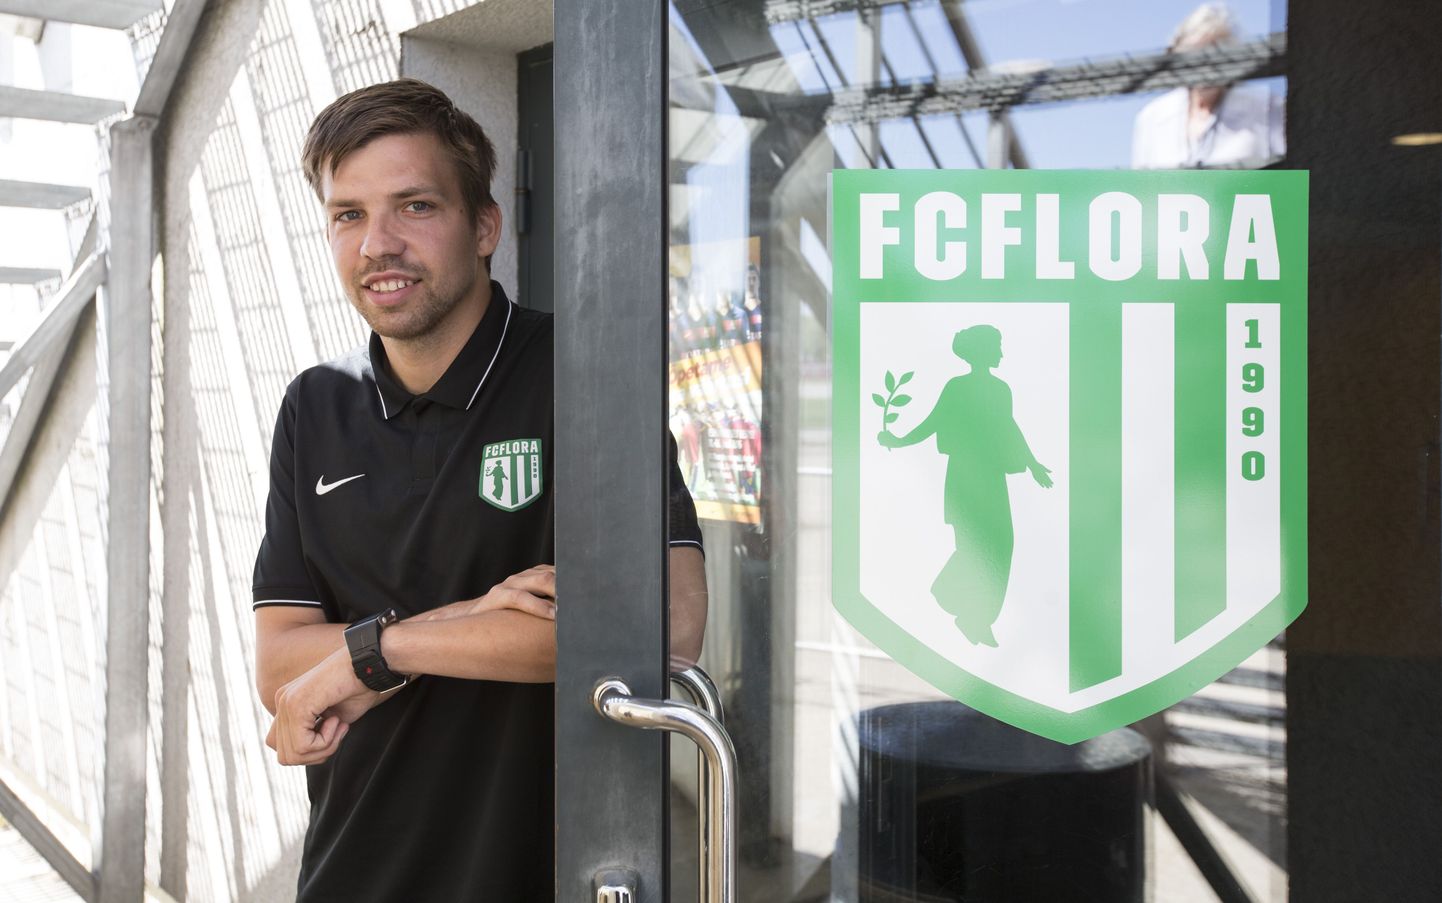 FC Flora president Pelle Pohlak.